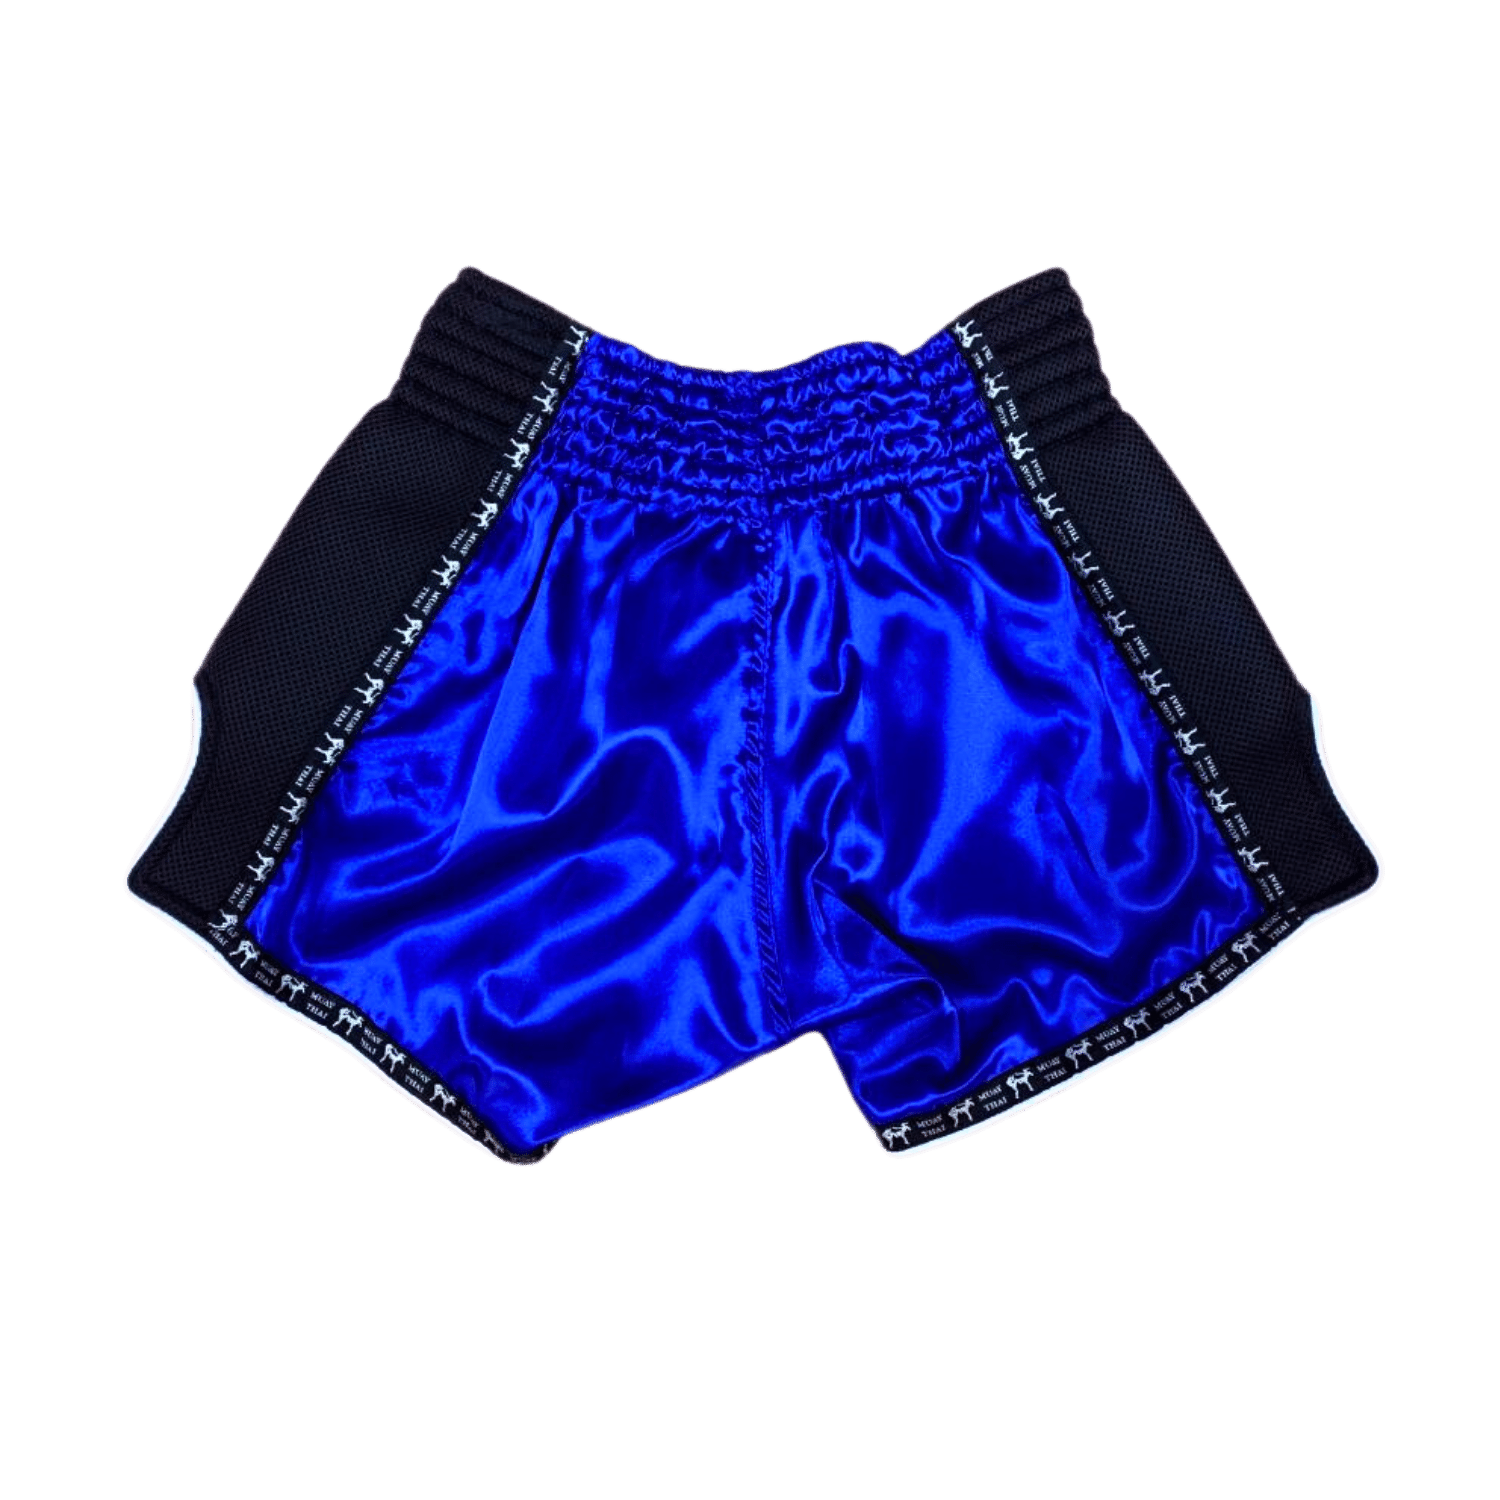 A pair of Blue Warrior Muay Thai boxing shorts by Hanuthai.